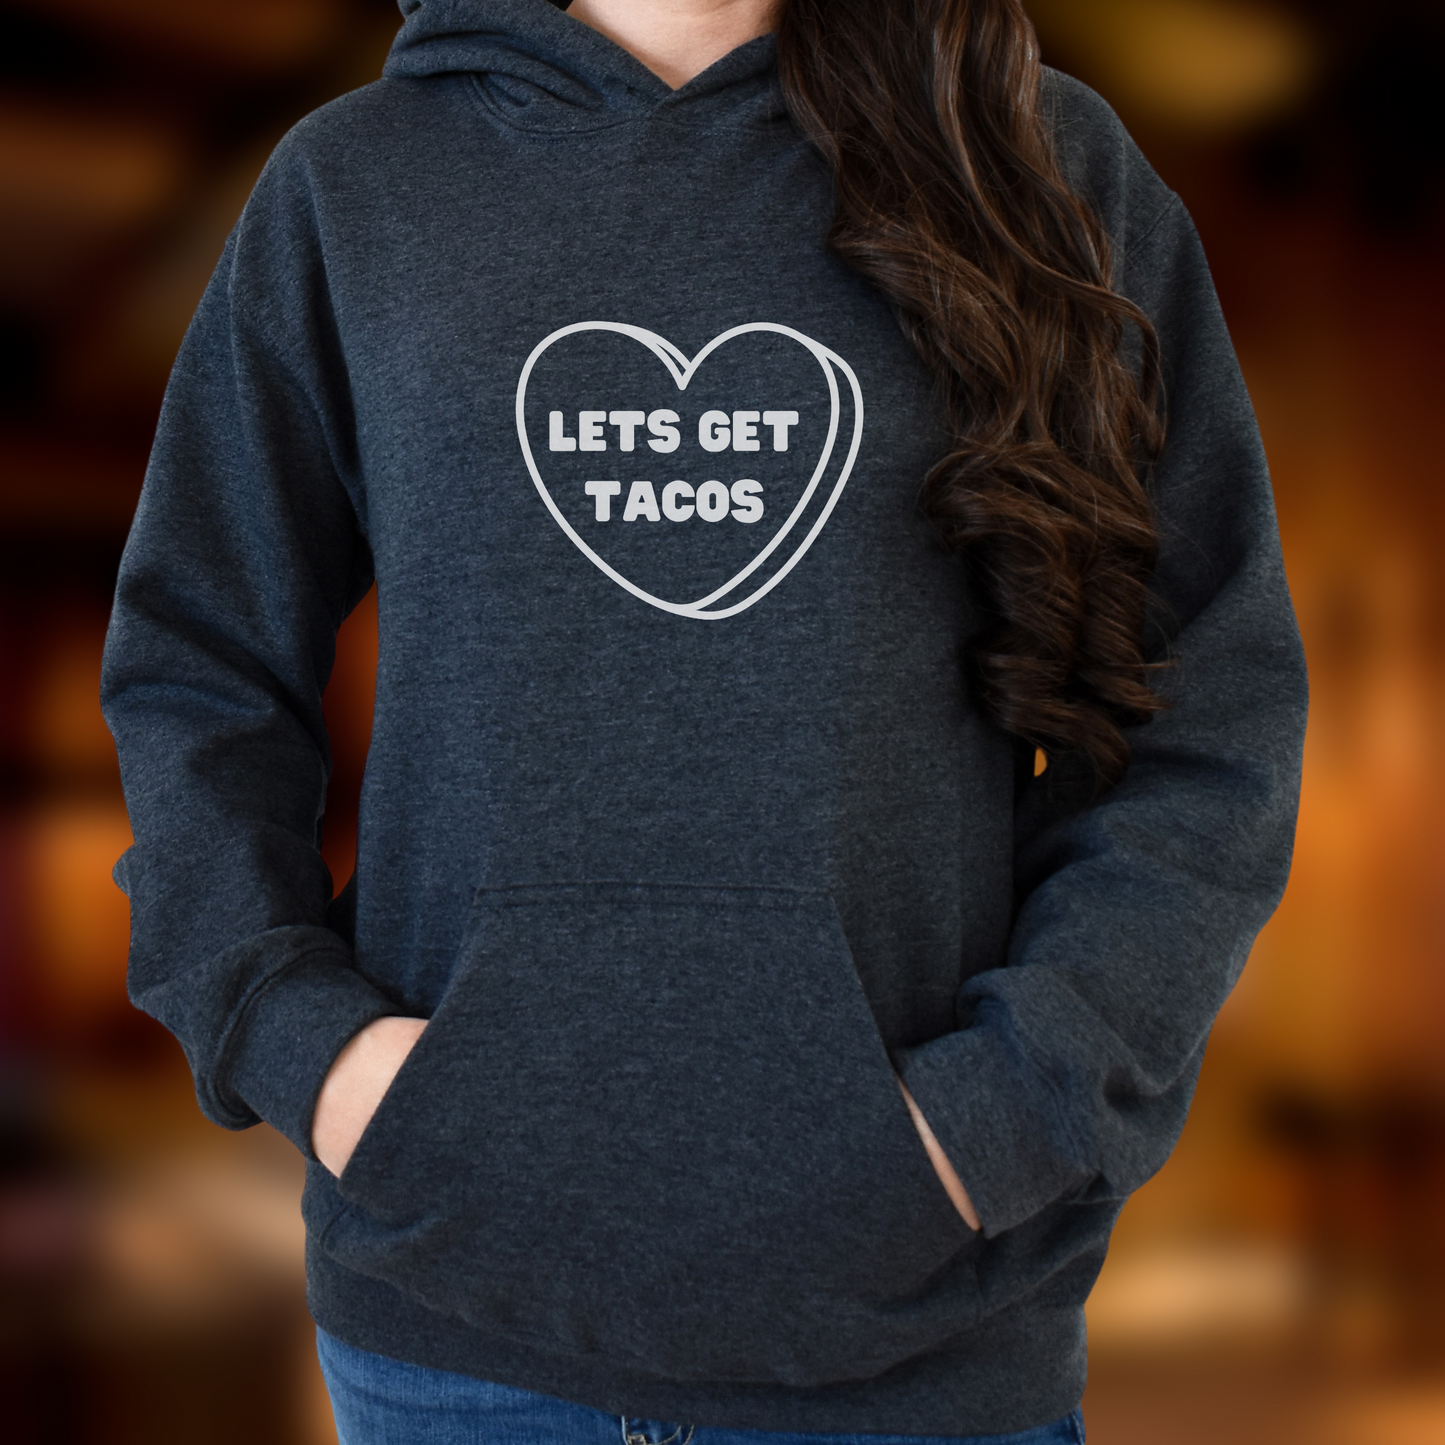 Let's Get Tacos Funny Hooded Sweatshirt